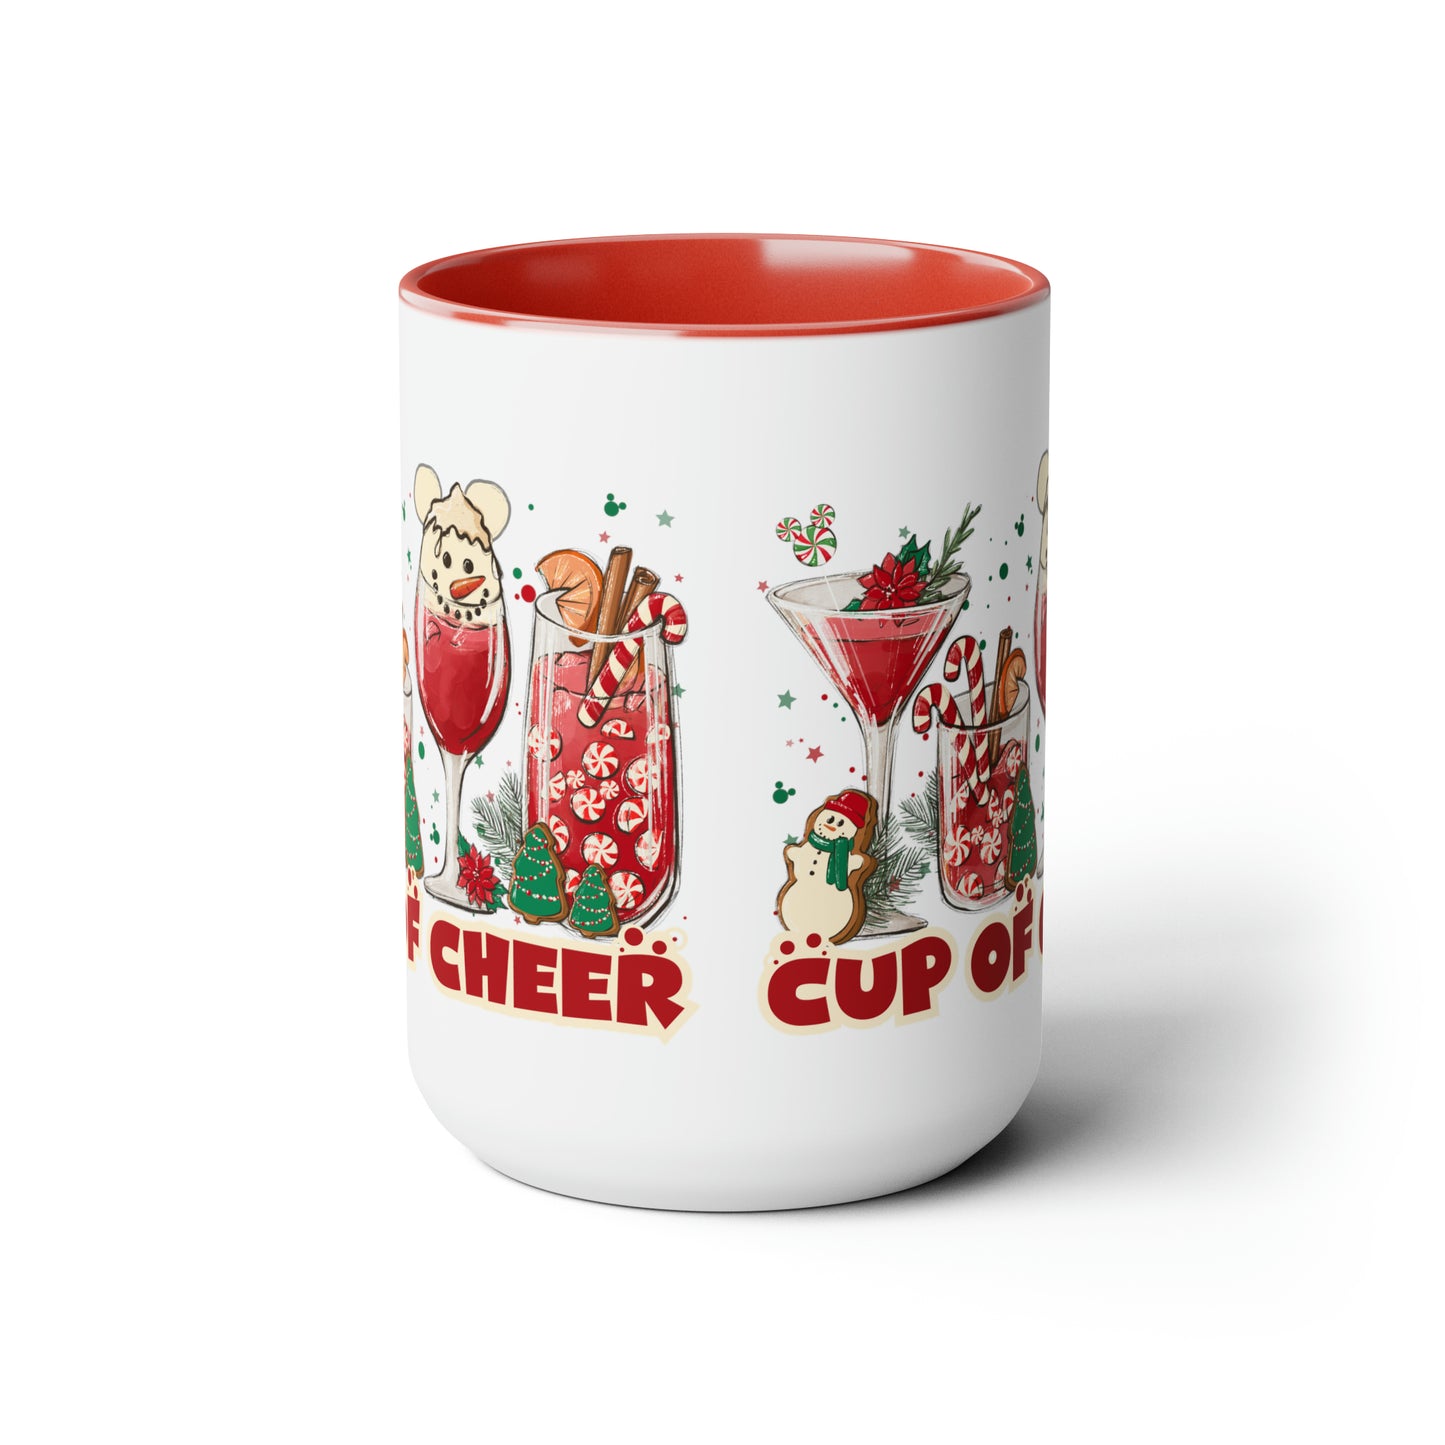 Cup of Cheer - Coffee Mug